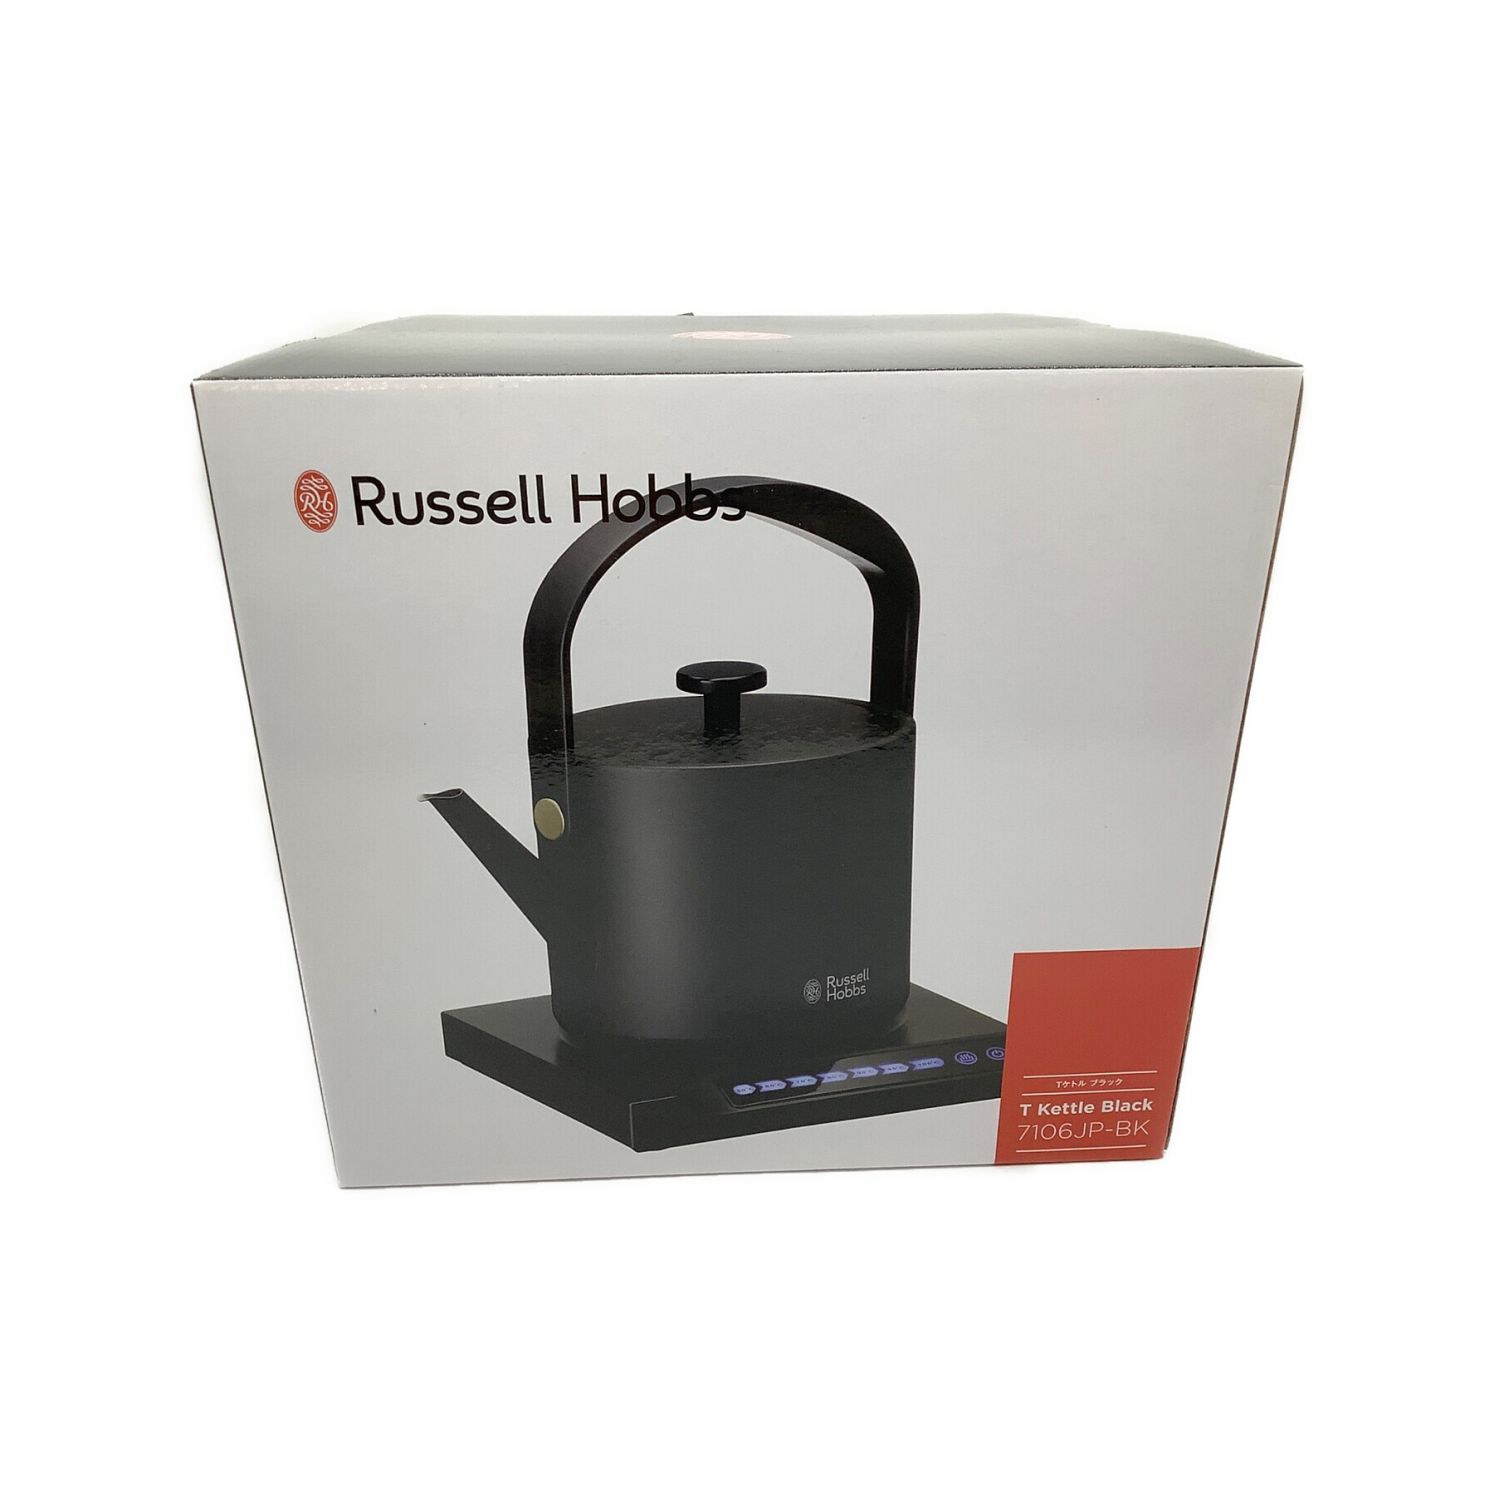 Russell Hobbs (ラッセル・ホブス) 電気ケトル ブラック 7106JP-BK 0.6L 保温温度設定機能 空焚き防止機能 取扱